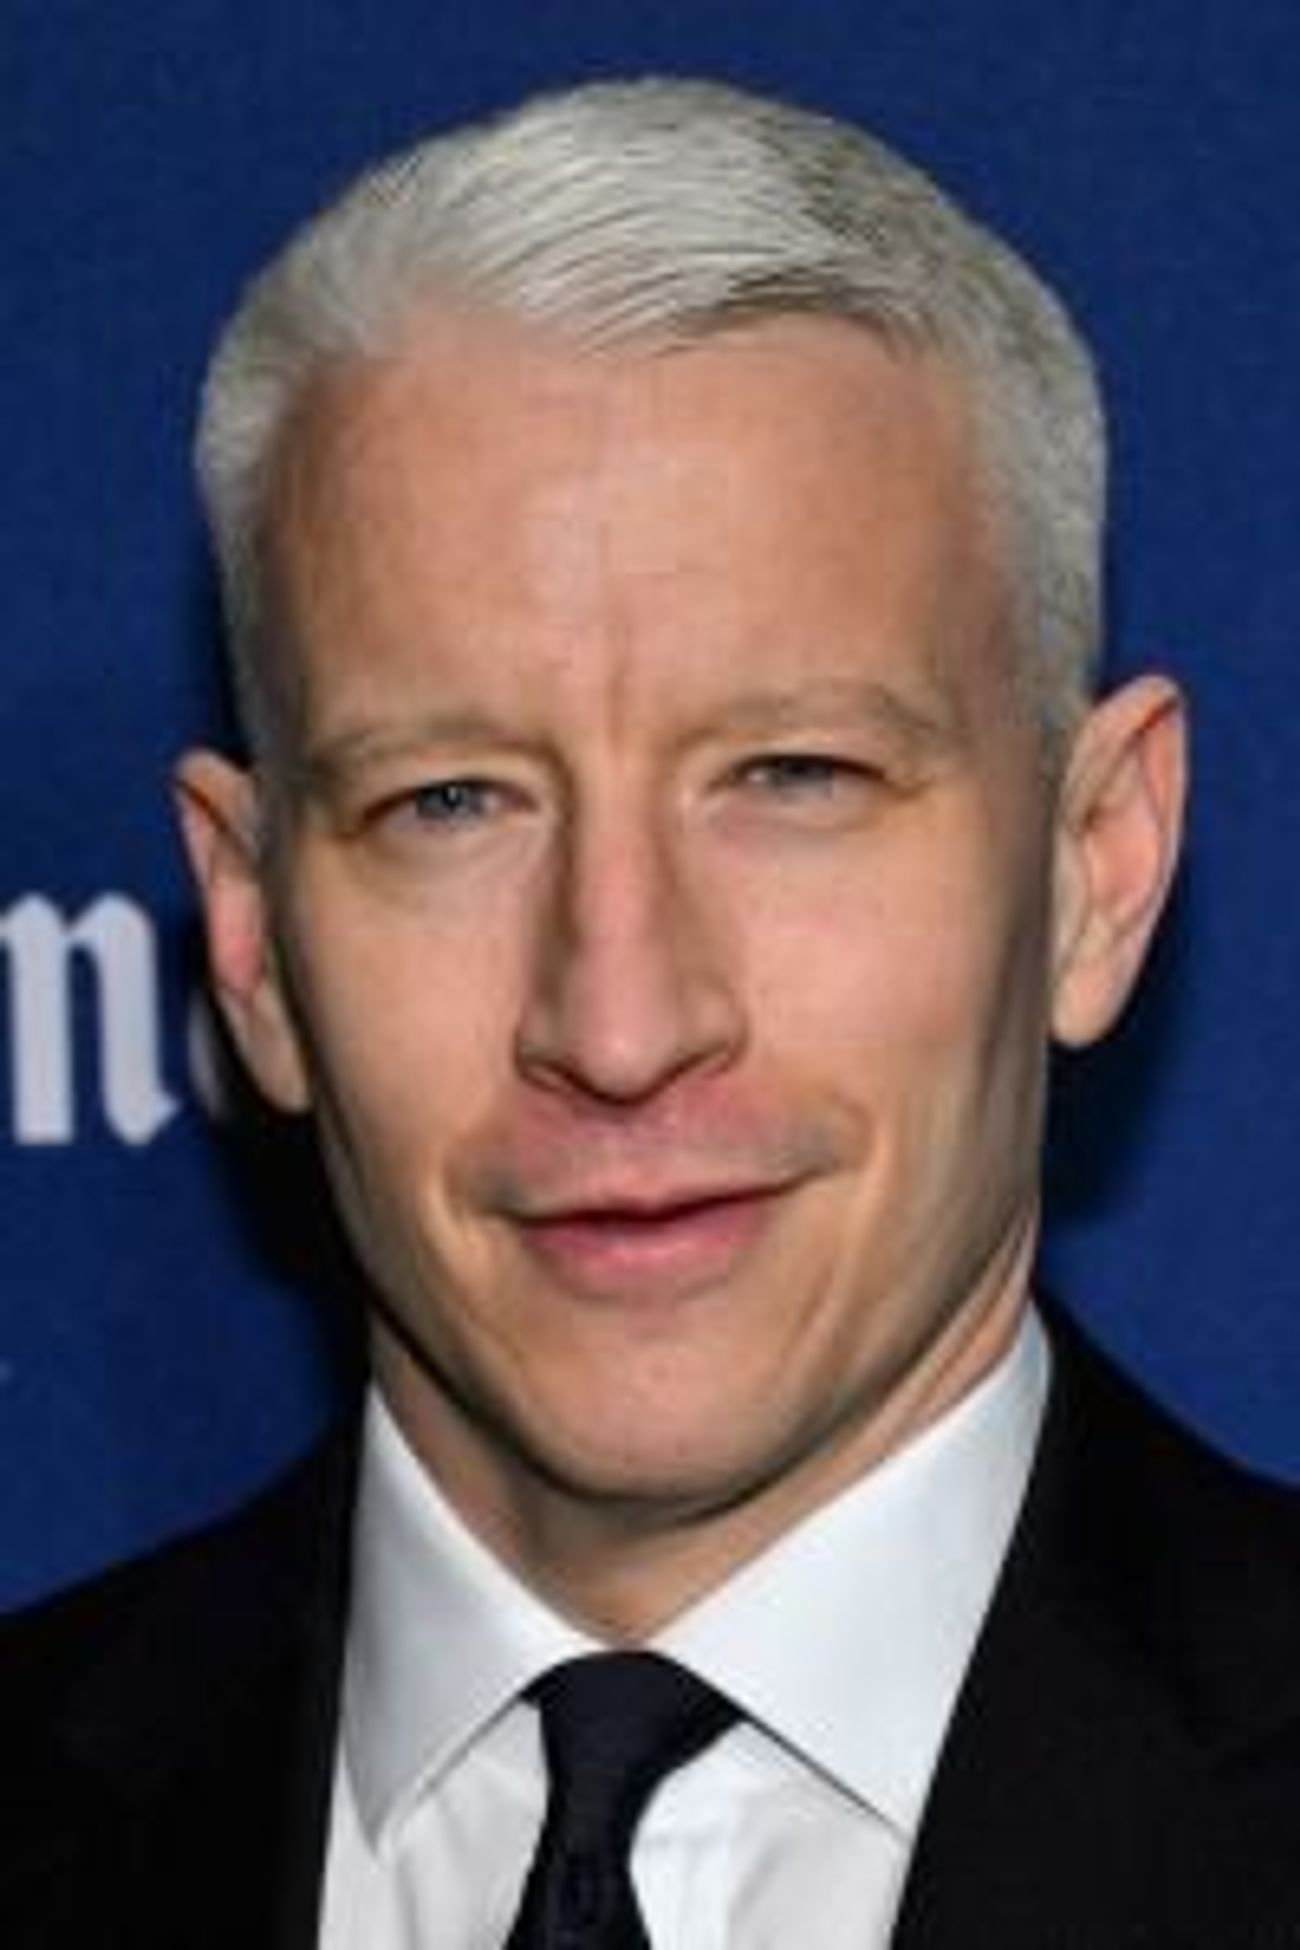 Anderson Cooper's 'Jewish White Supremacist' Stalker The Forward